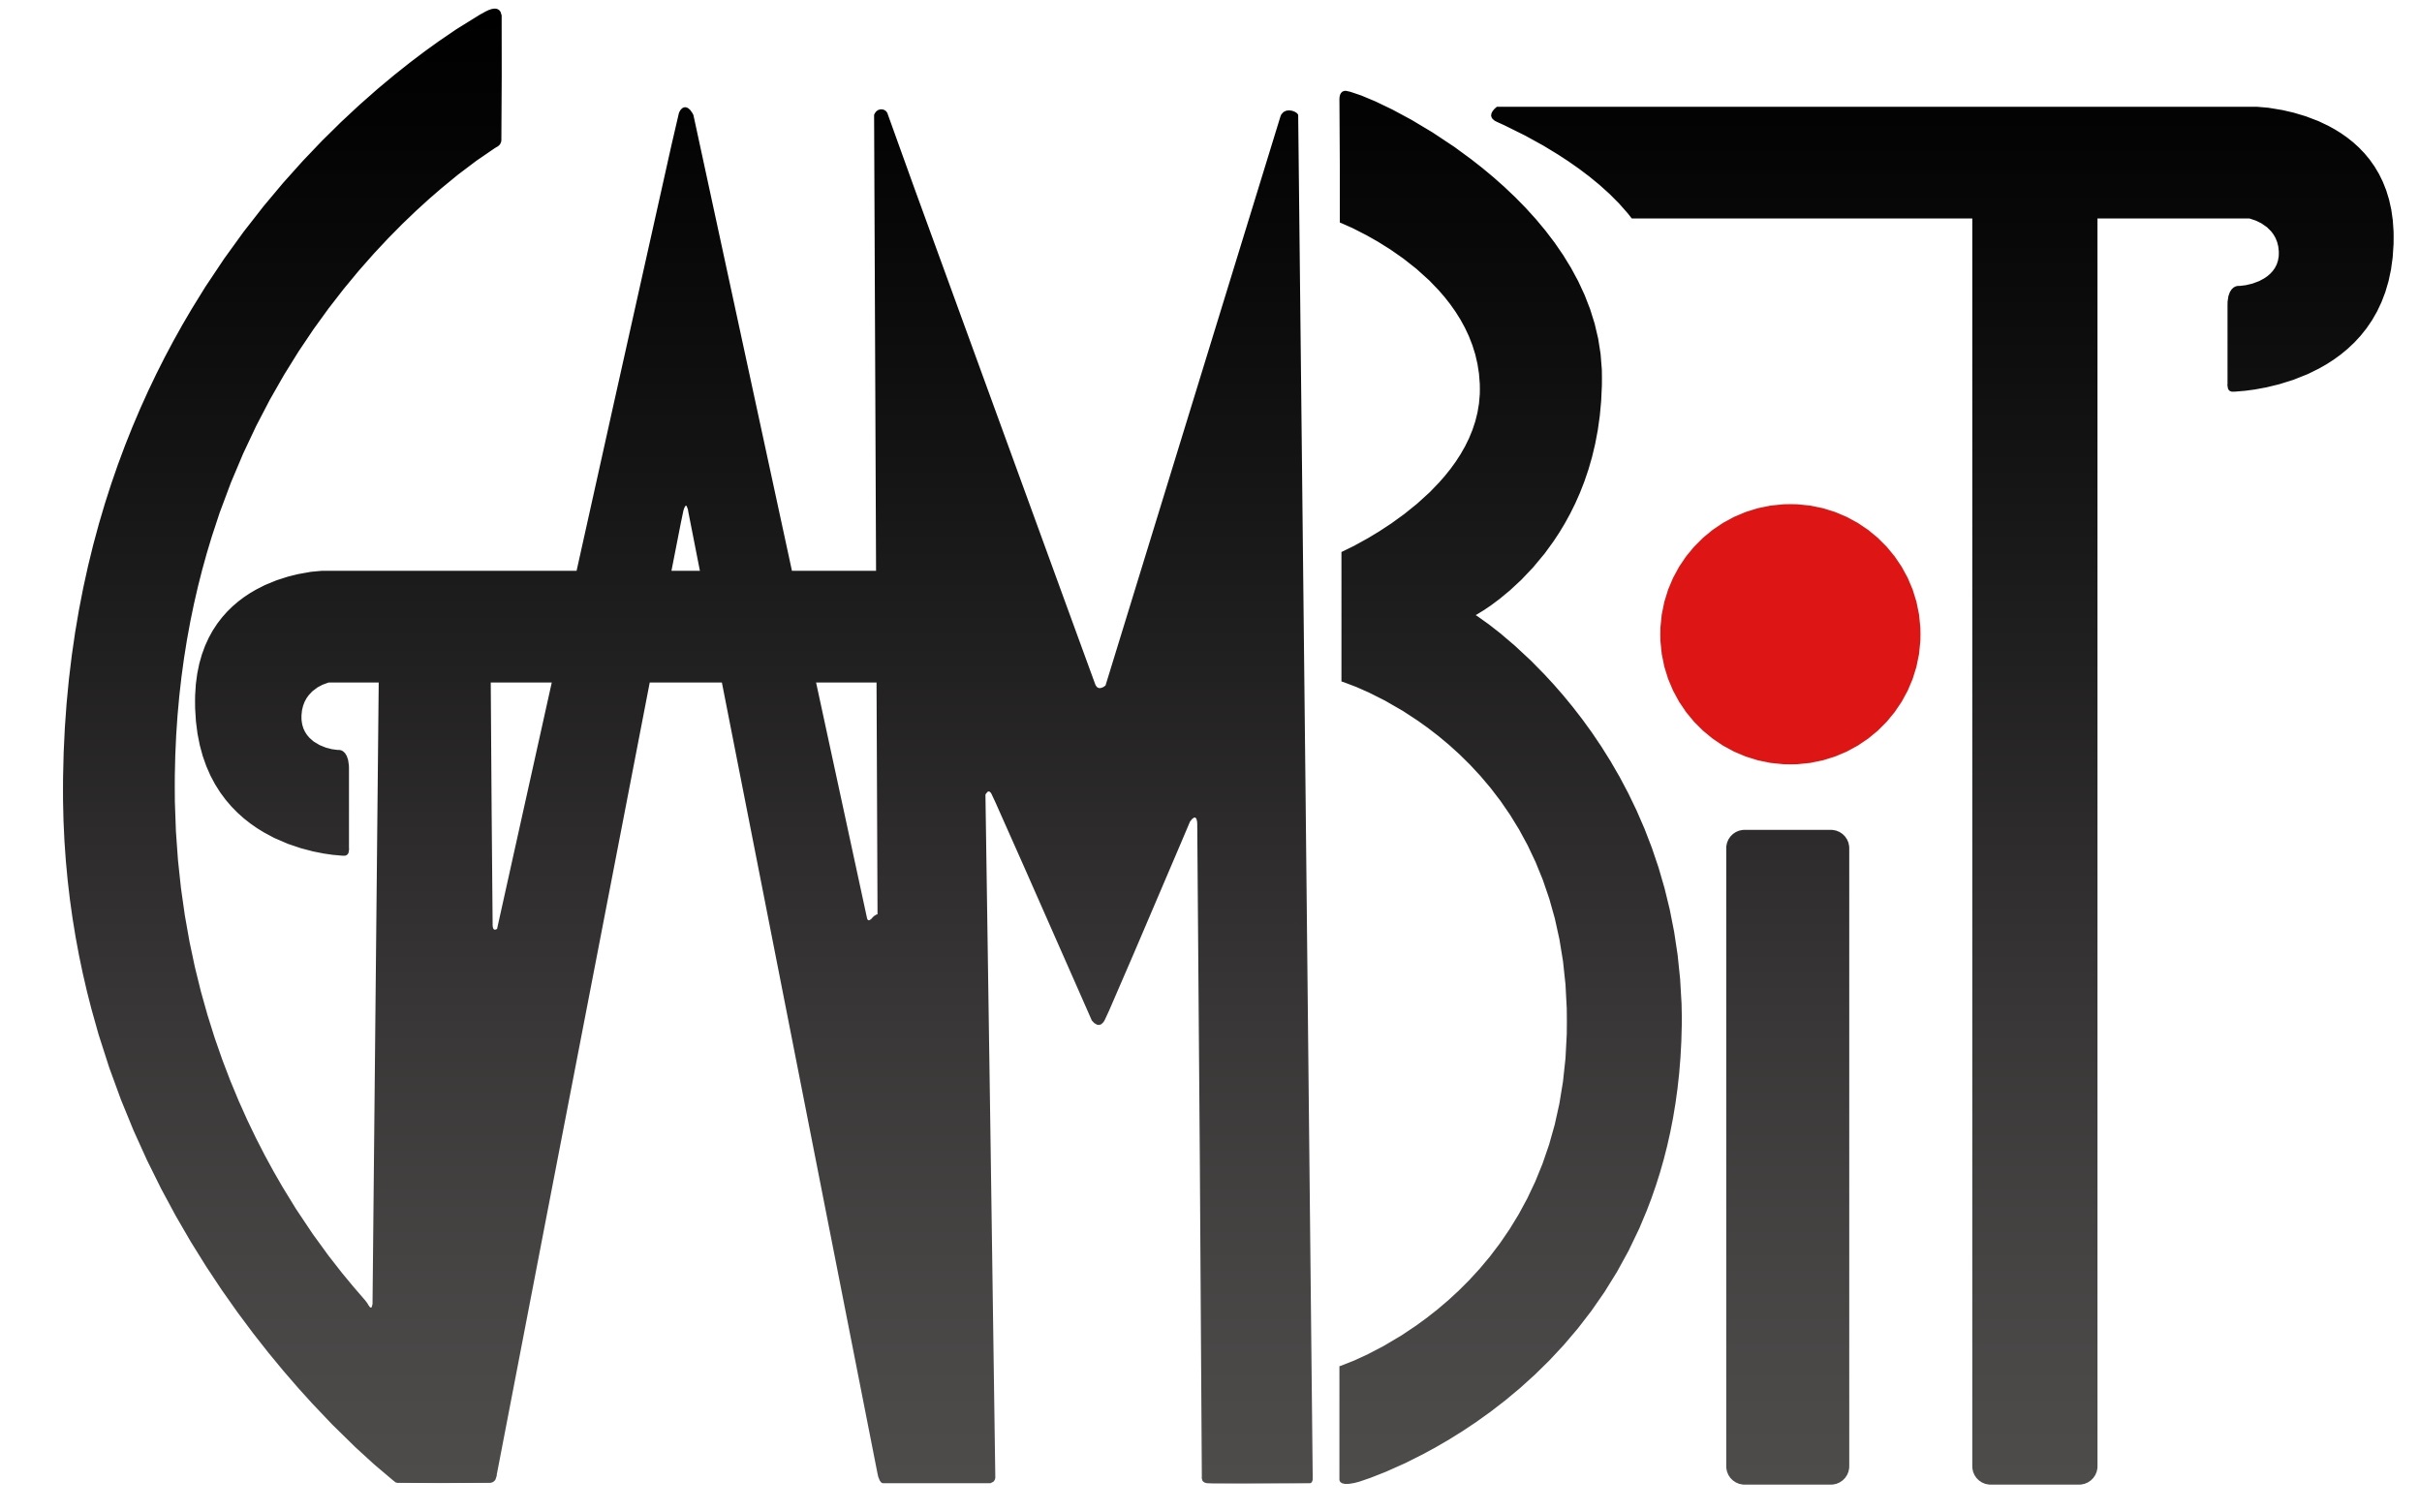 GAMBIT Logo.jpg 0ded5f3c07b56b2a86042aa8f319da4c